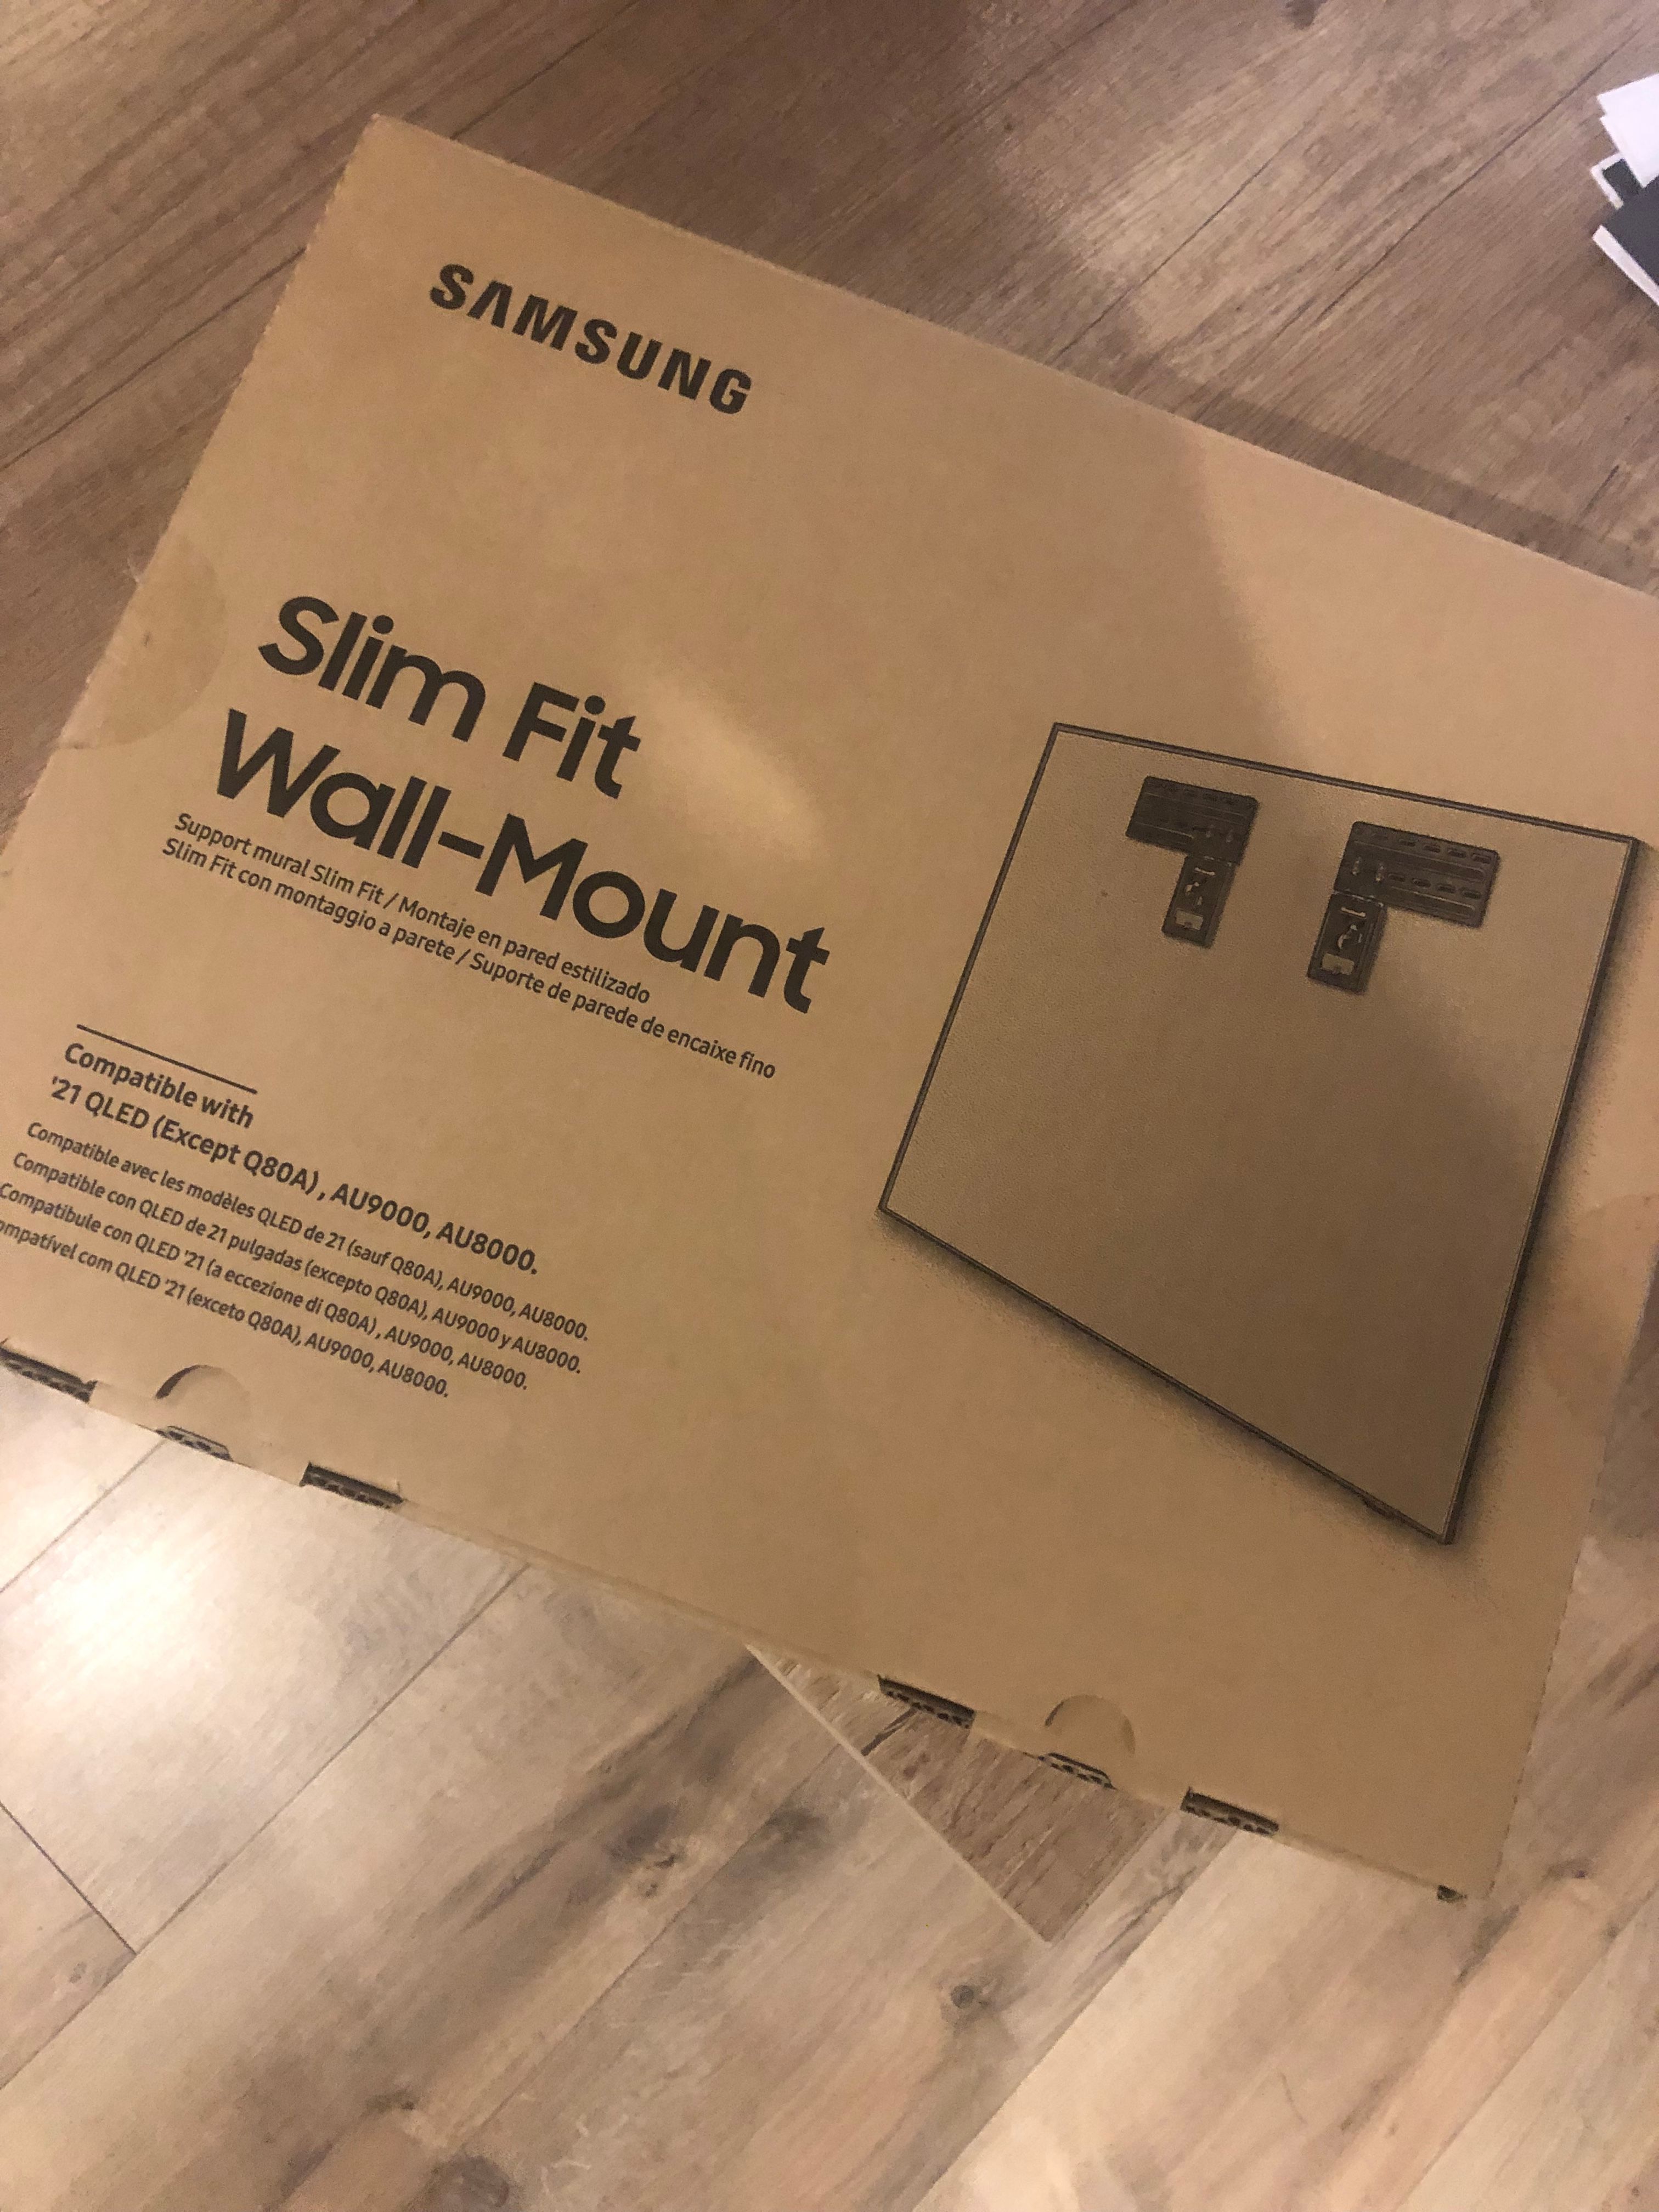 QN95A 65 Zoll - Slim Fit Wall Mount – Seite 2 - Samsung Community